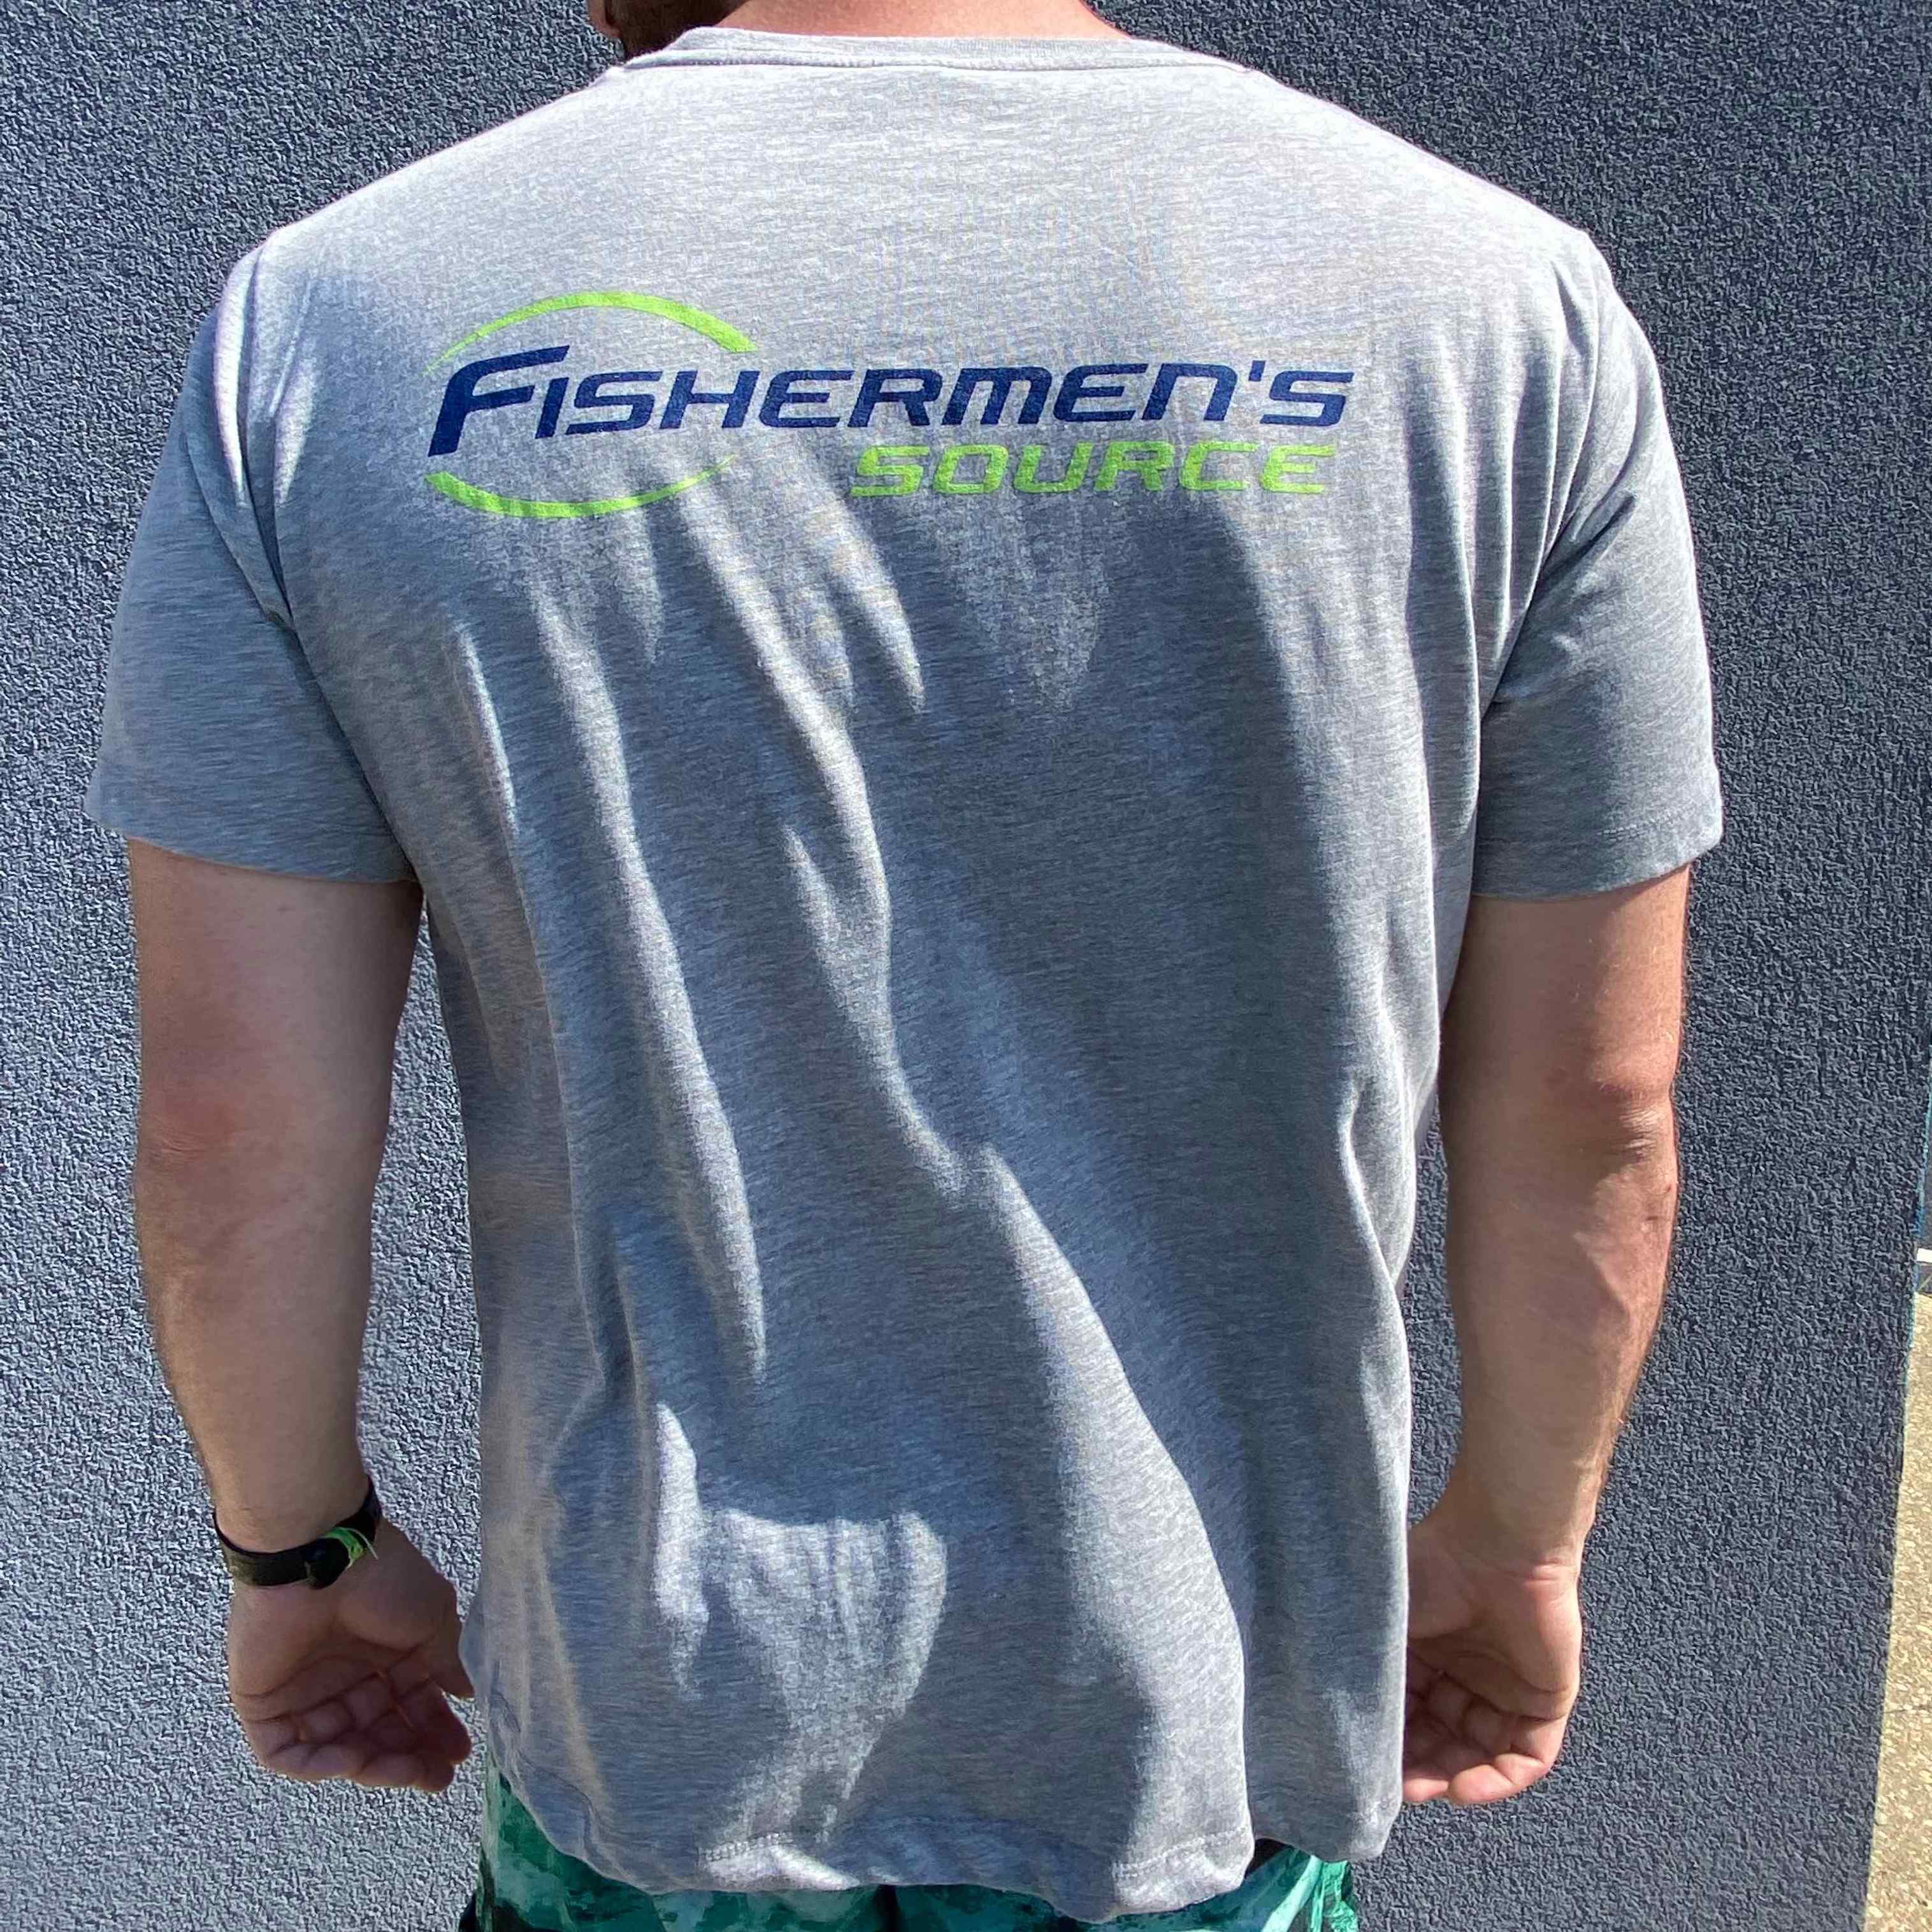 Fishermen's Source T-Shirt